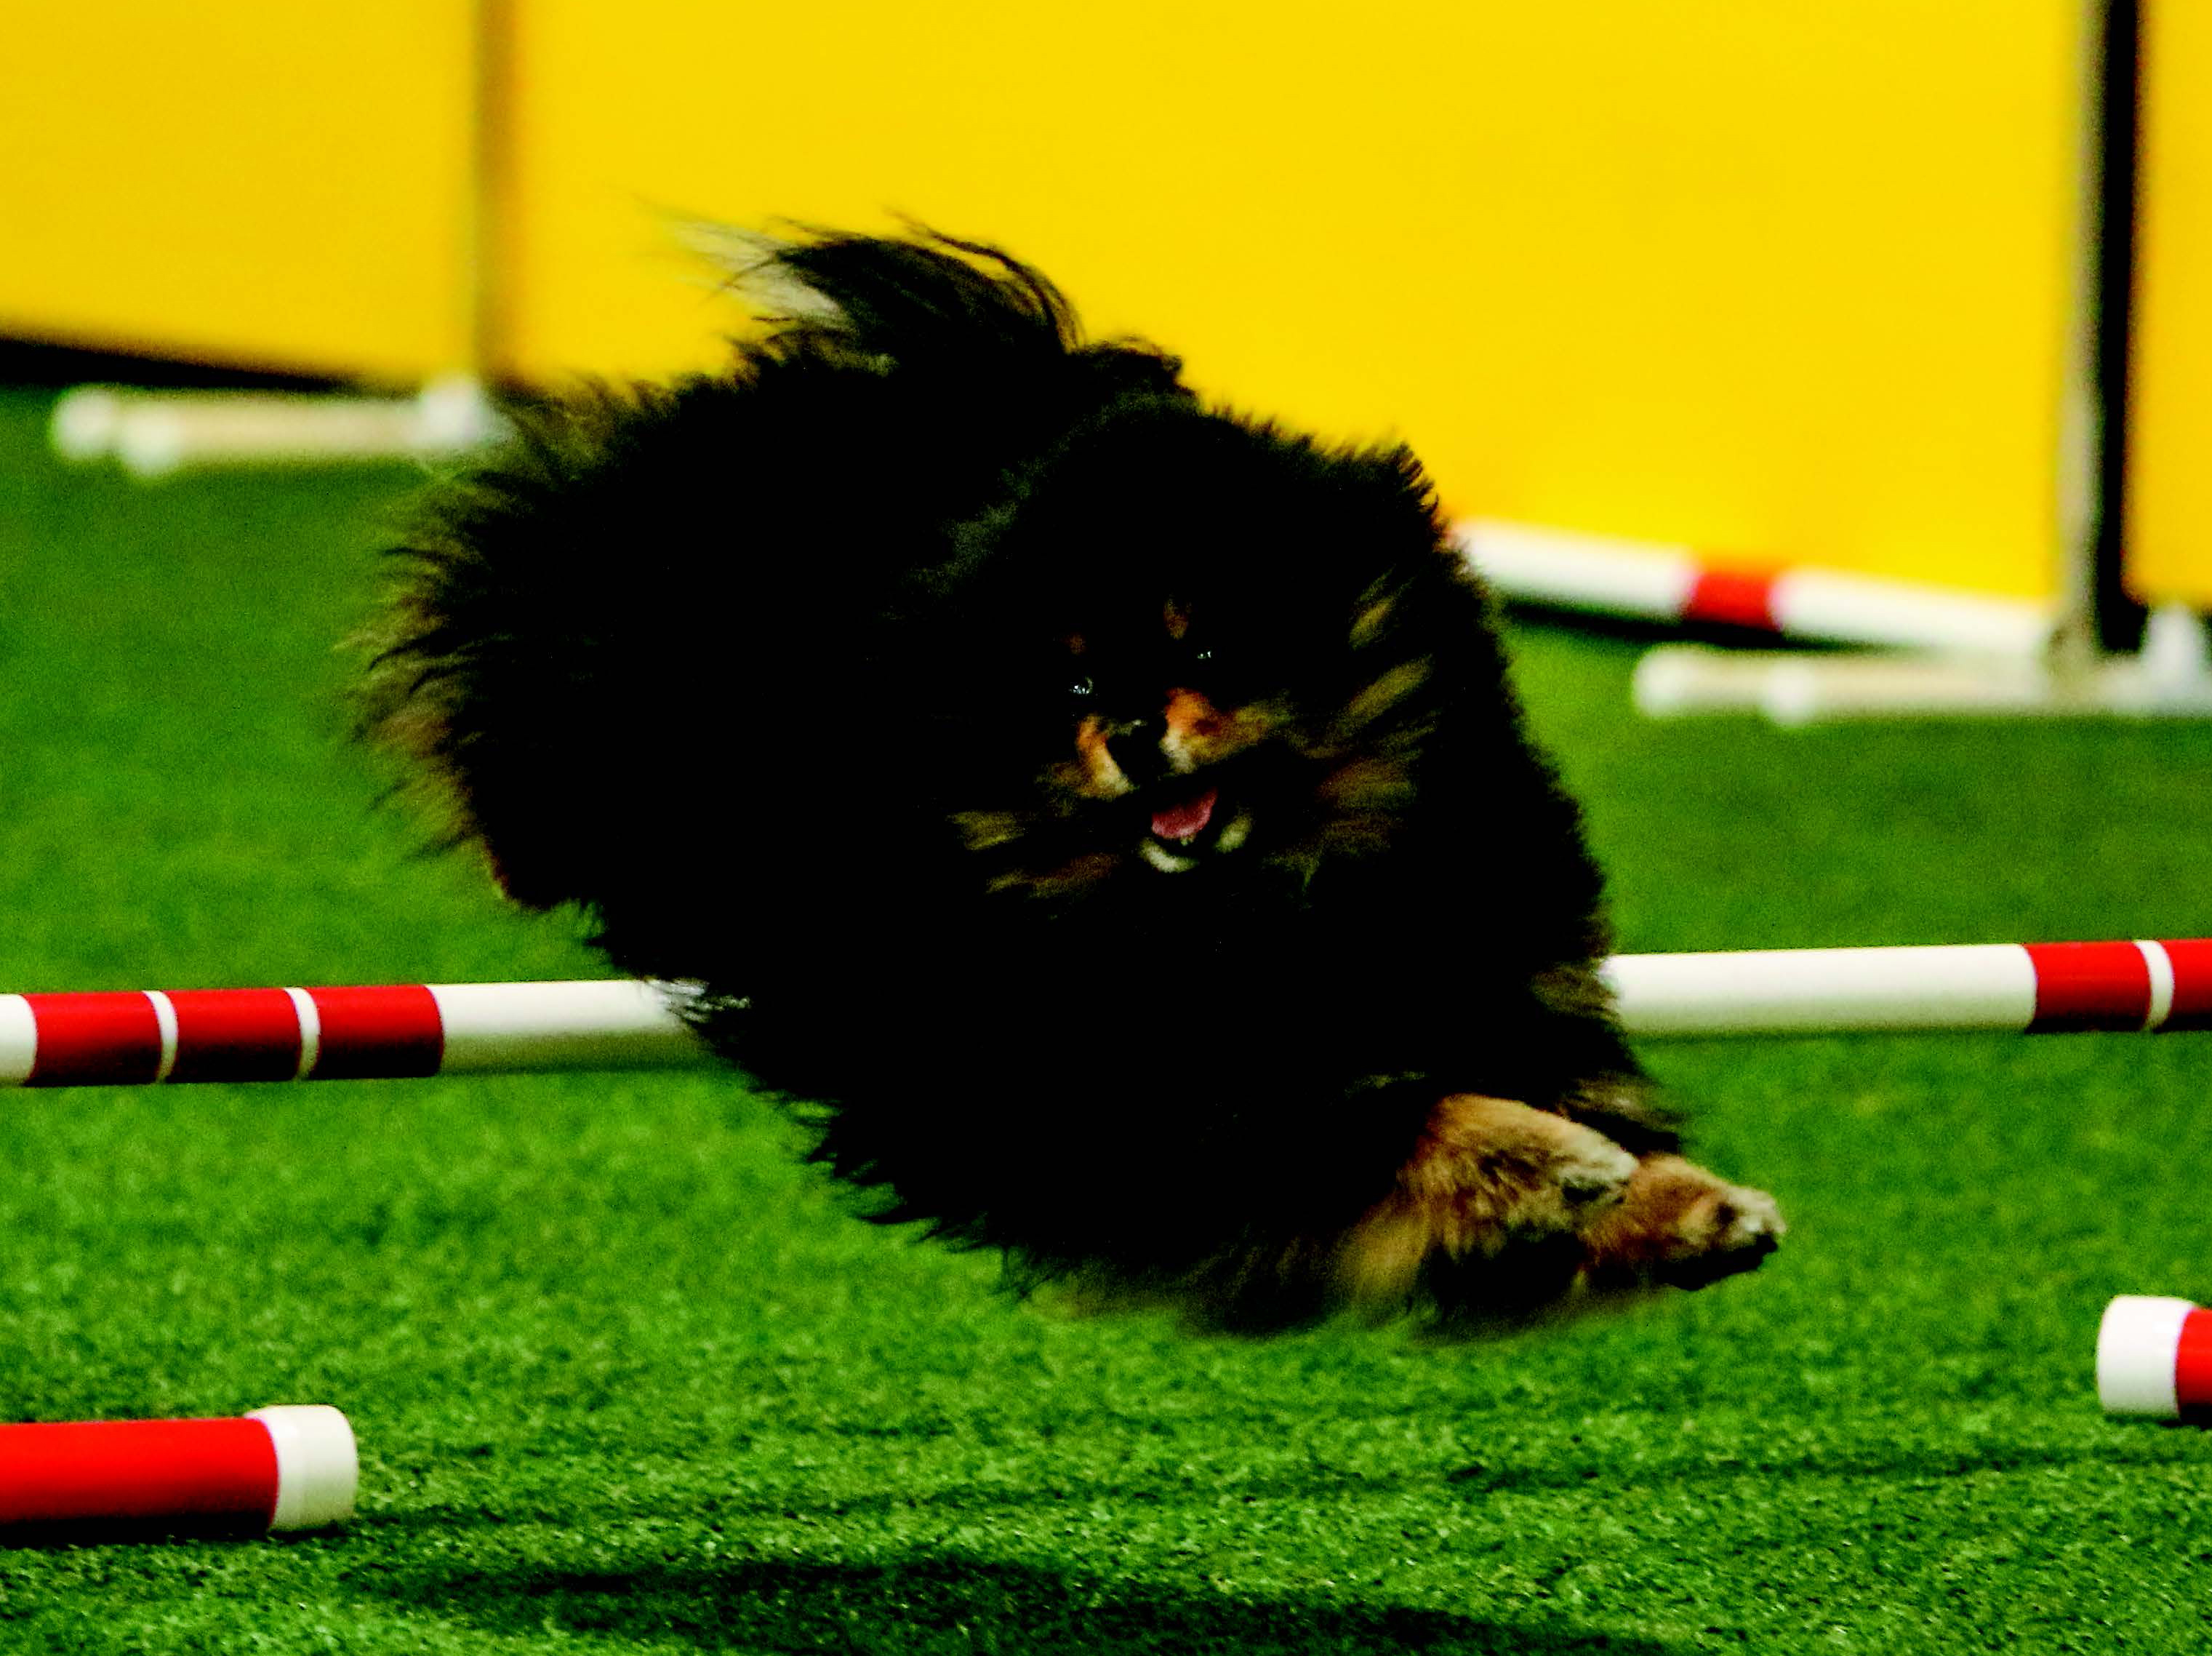 A Pomeranian jumping on an agility course